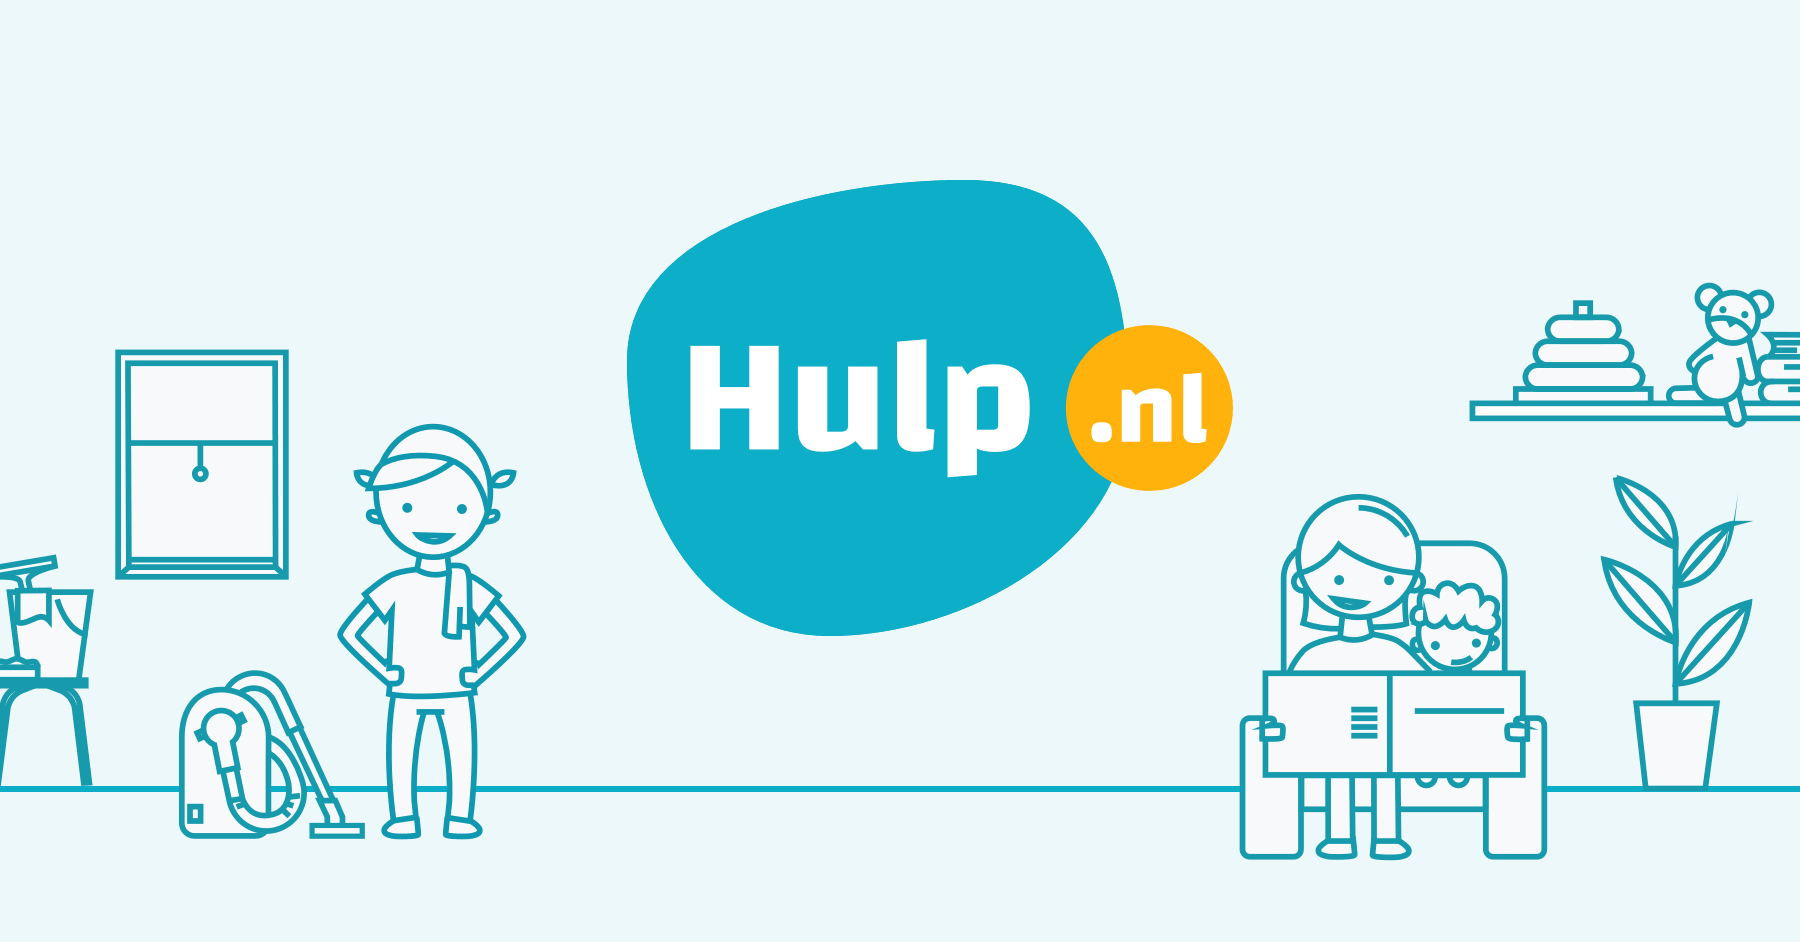 (c) Hulp.nl